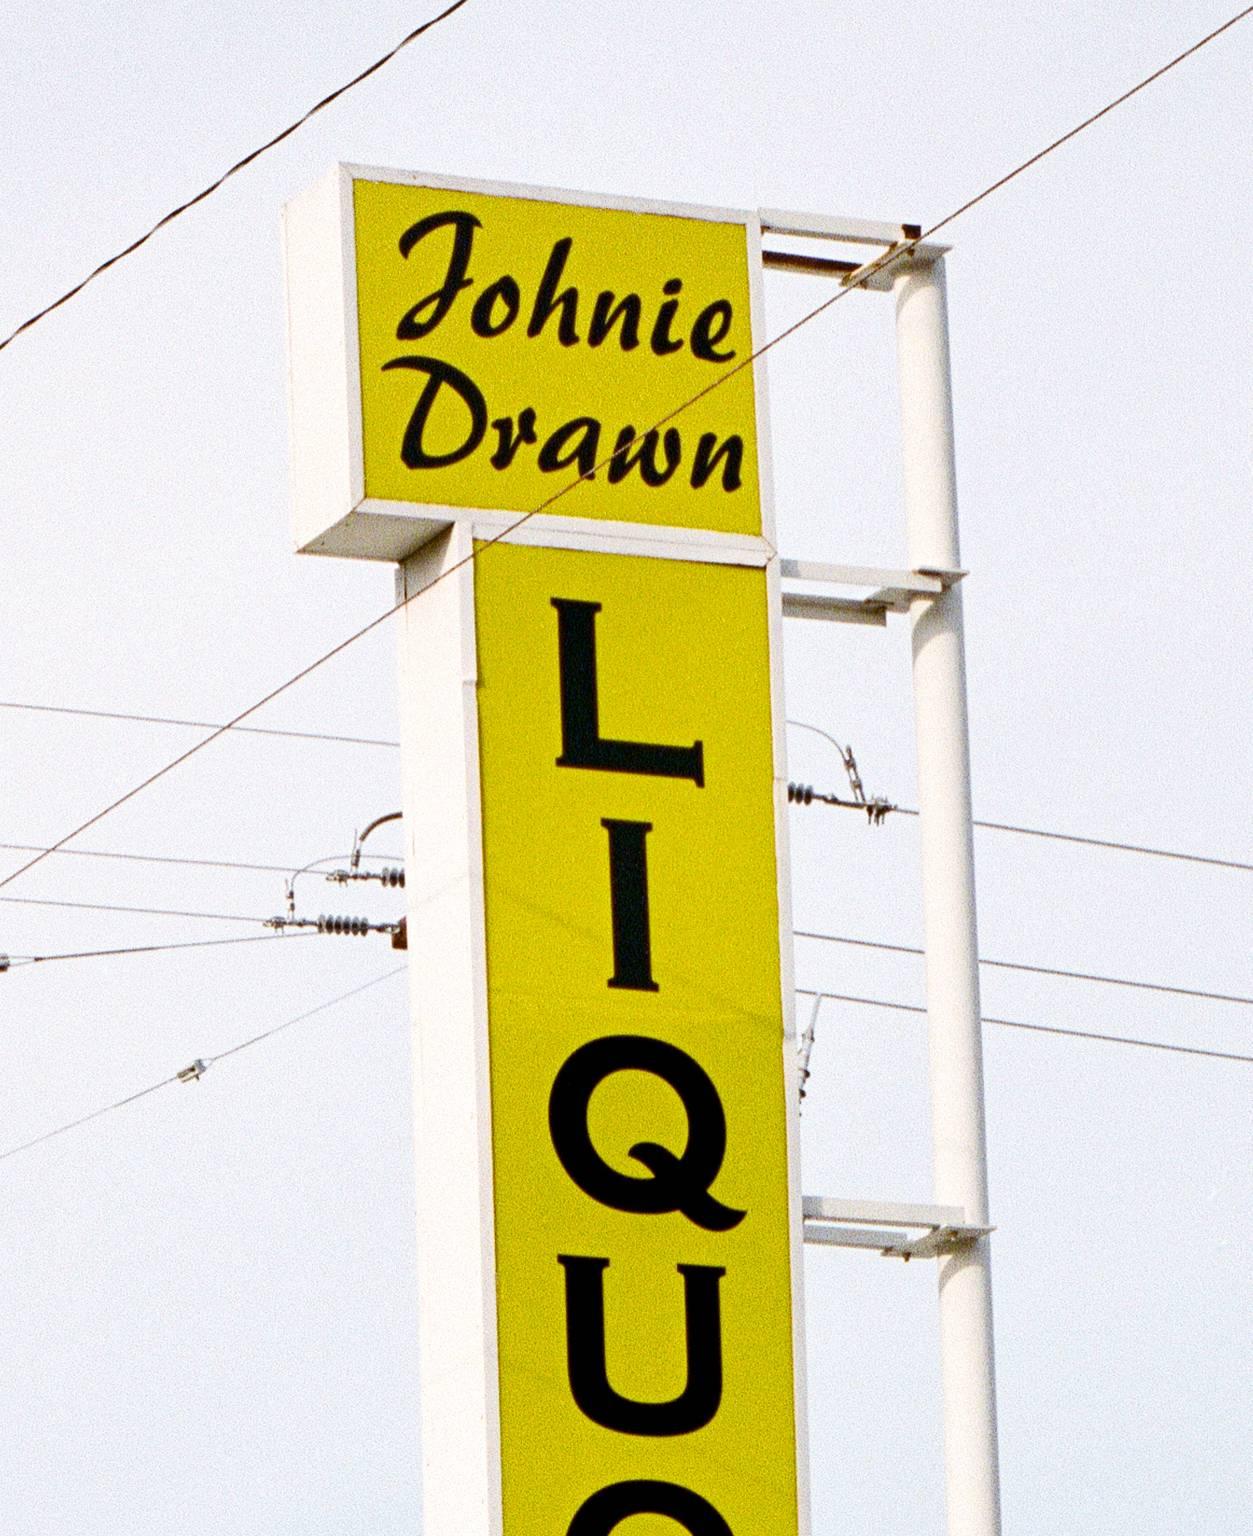 Johnie Liquor - Photograph by Jim Ryce